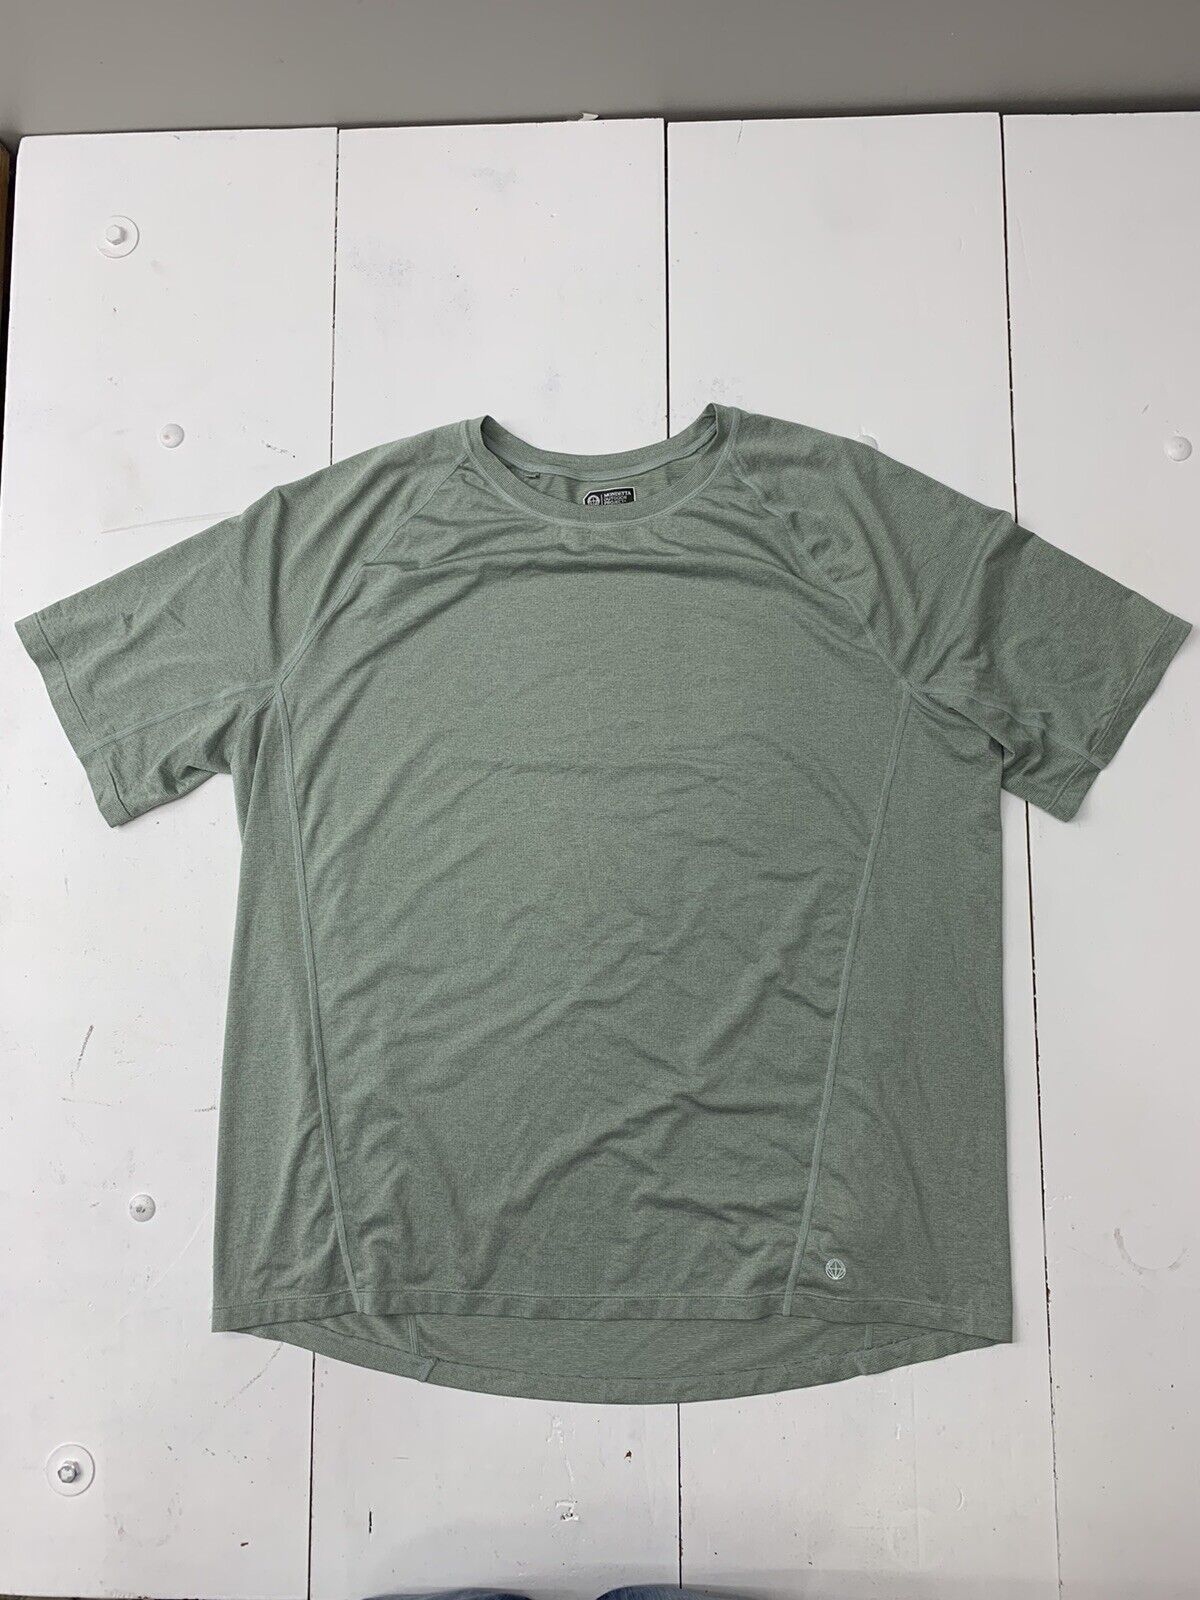 Mondetta Mens Green Short Sleeve Shirt Size XXL - beyond exchange